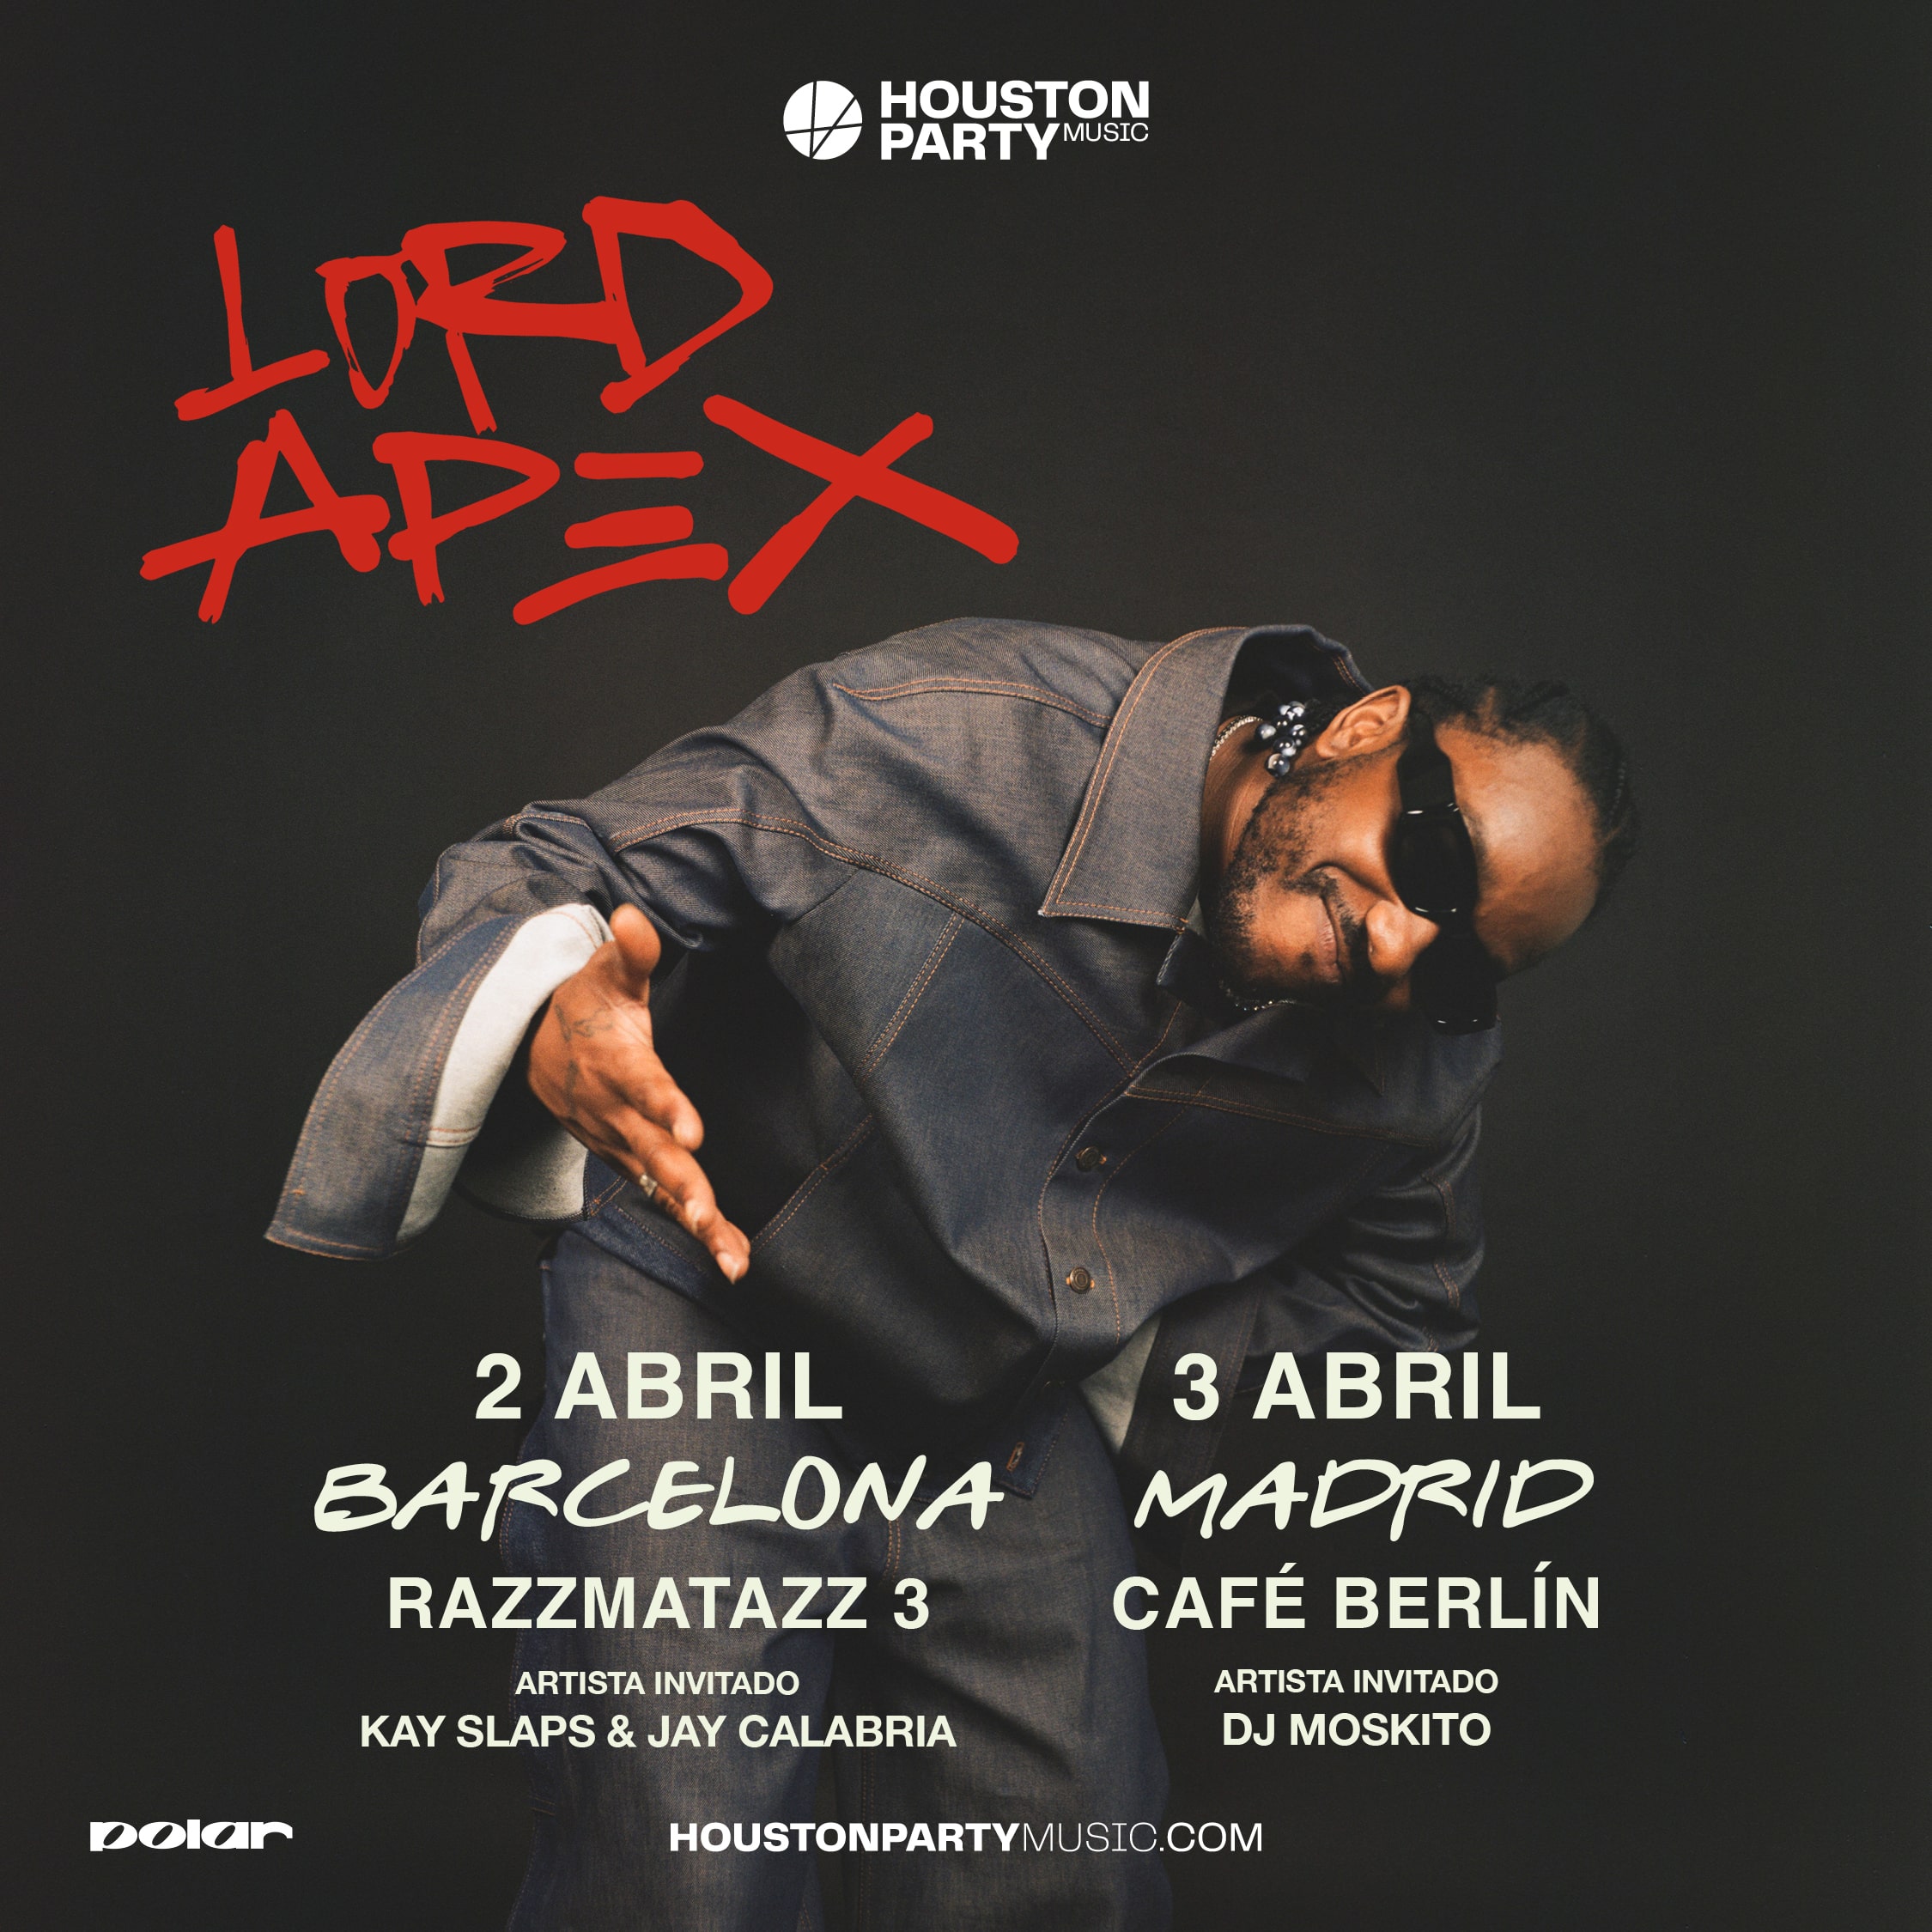 Lord Apex en Barcelona y Madrid